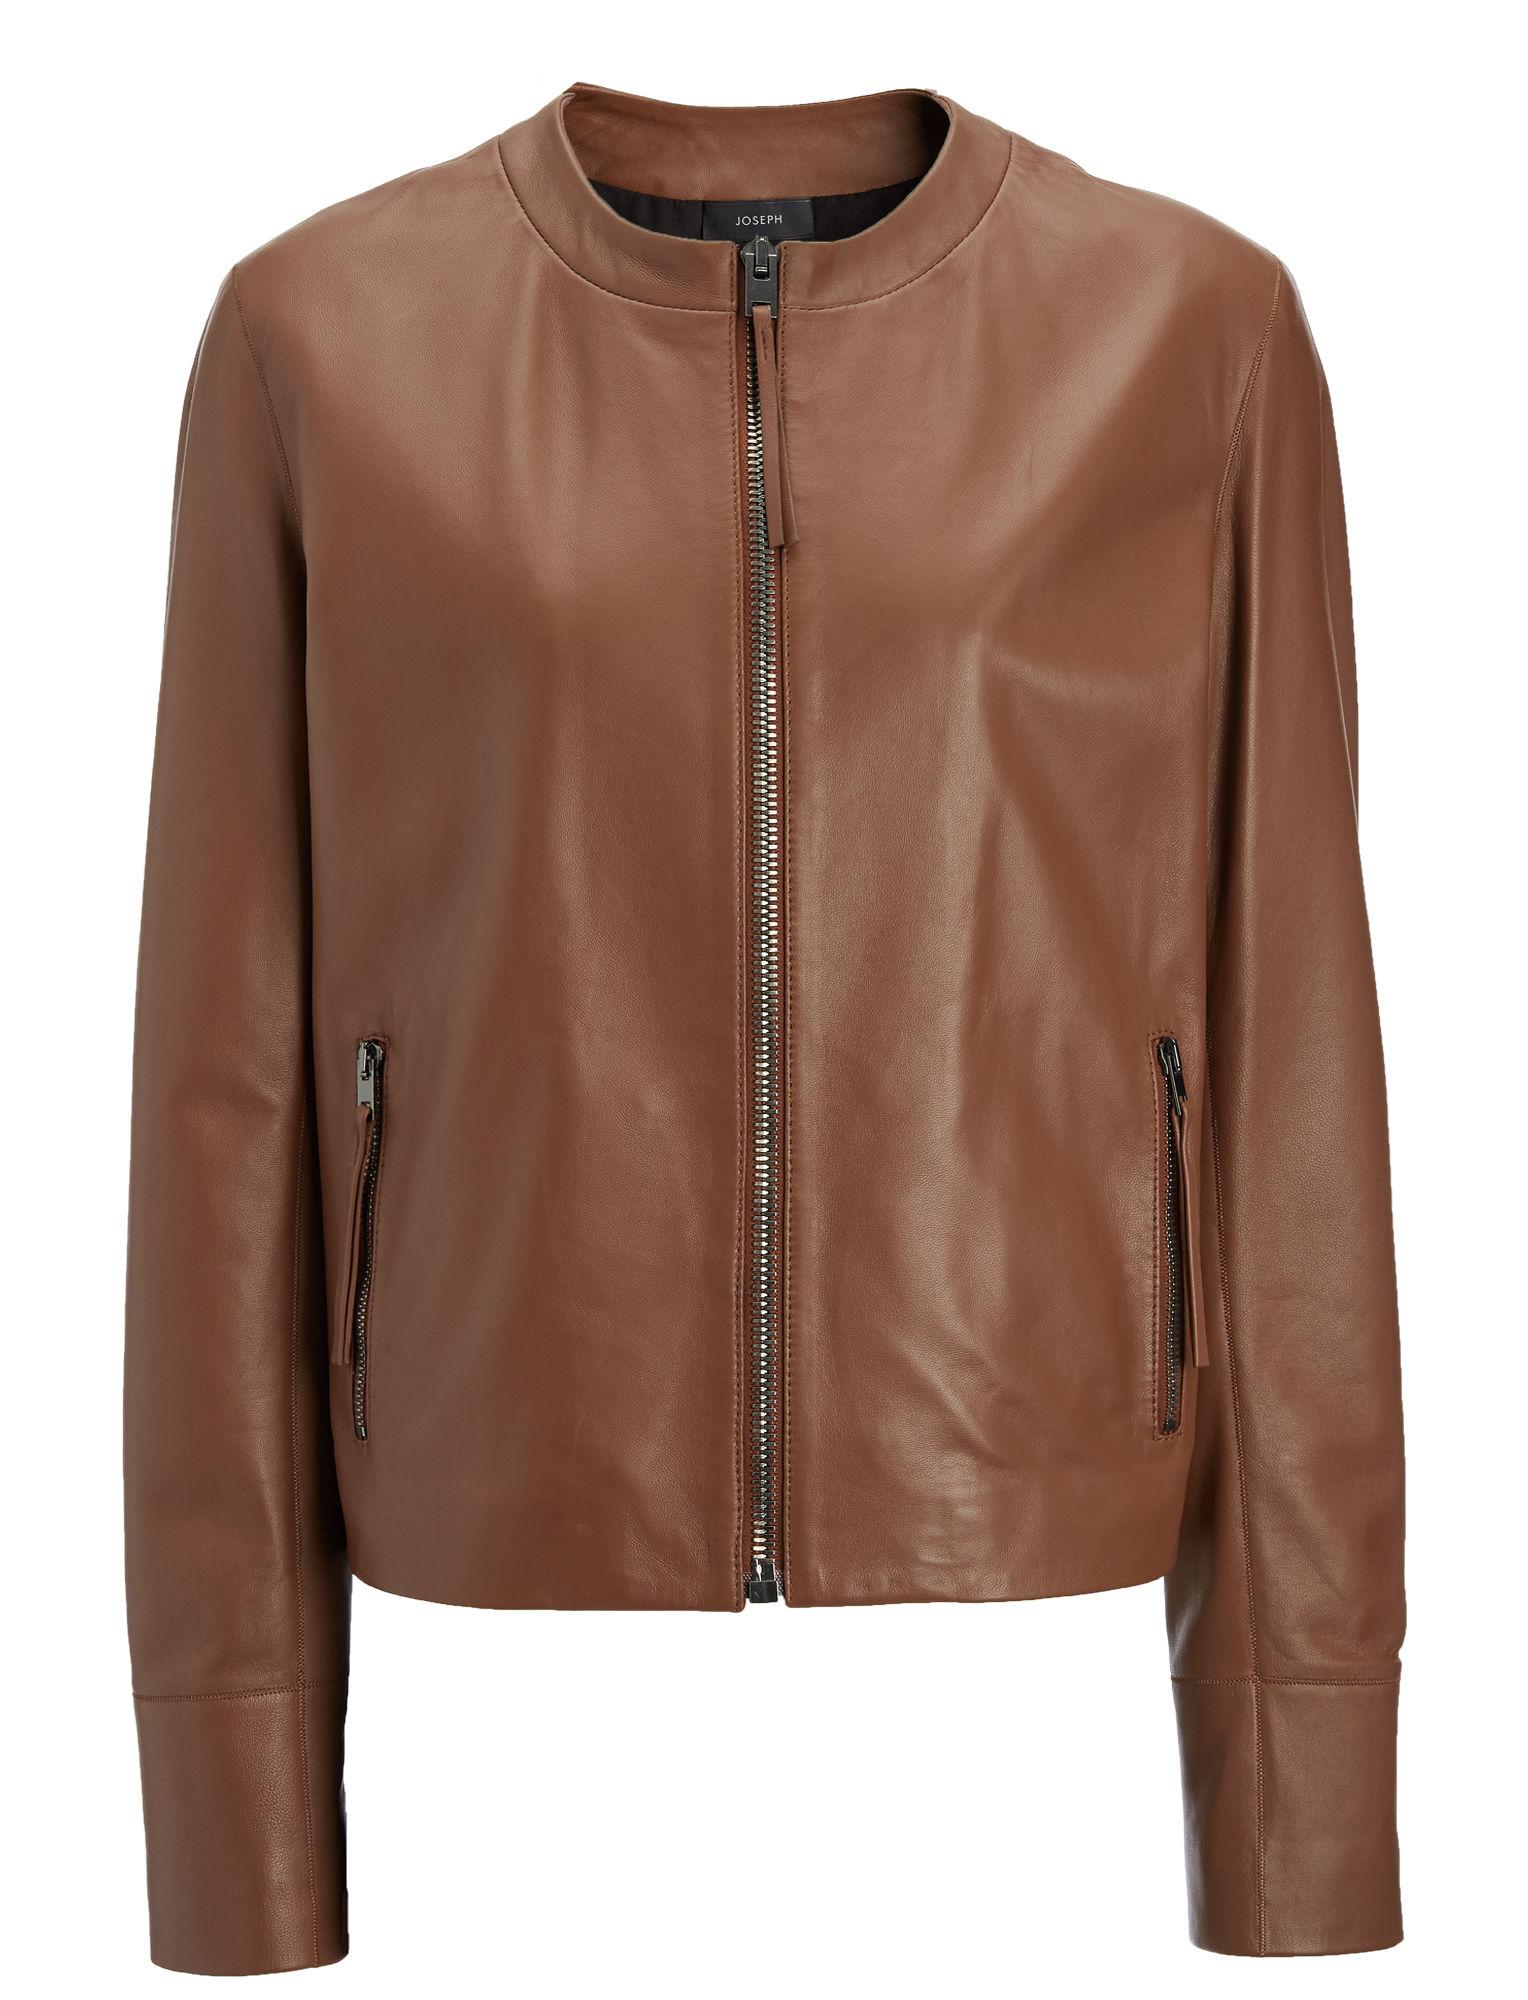 Lyst - Joseph Matt Nappa Leather Alya Jacket in Brown